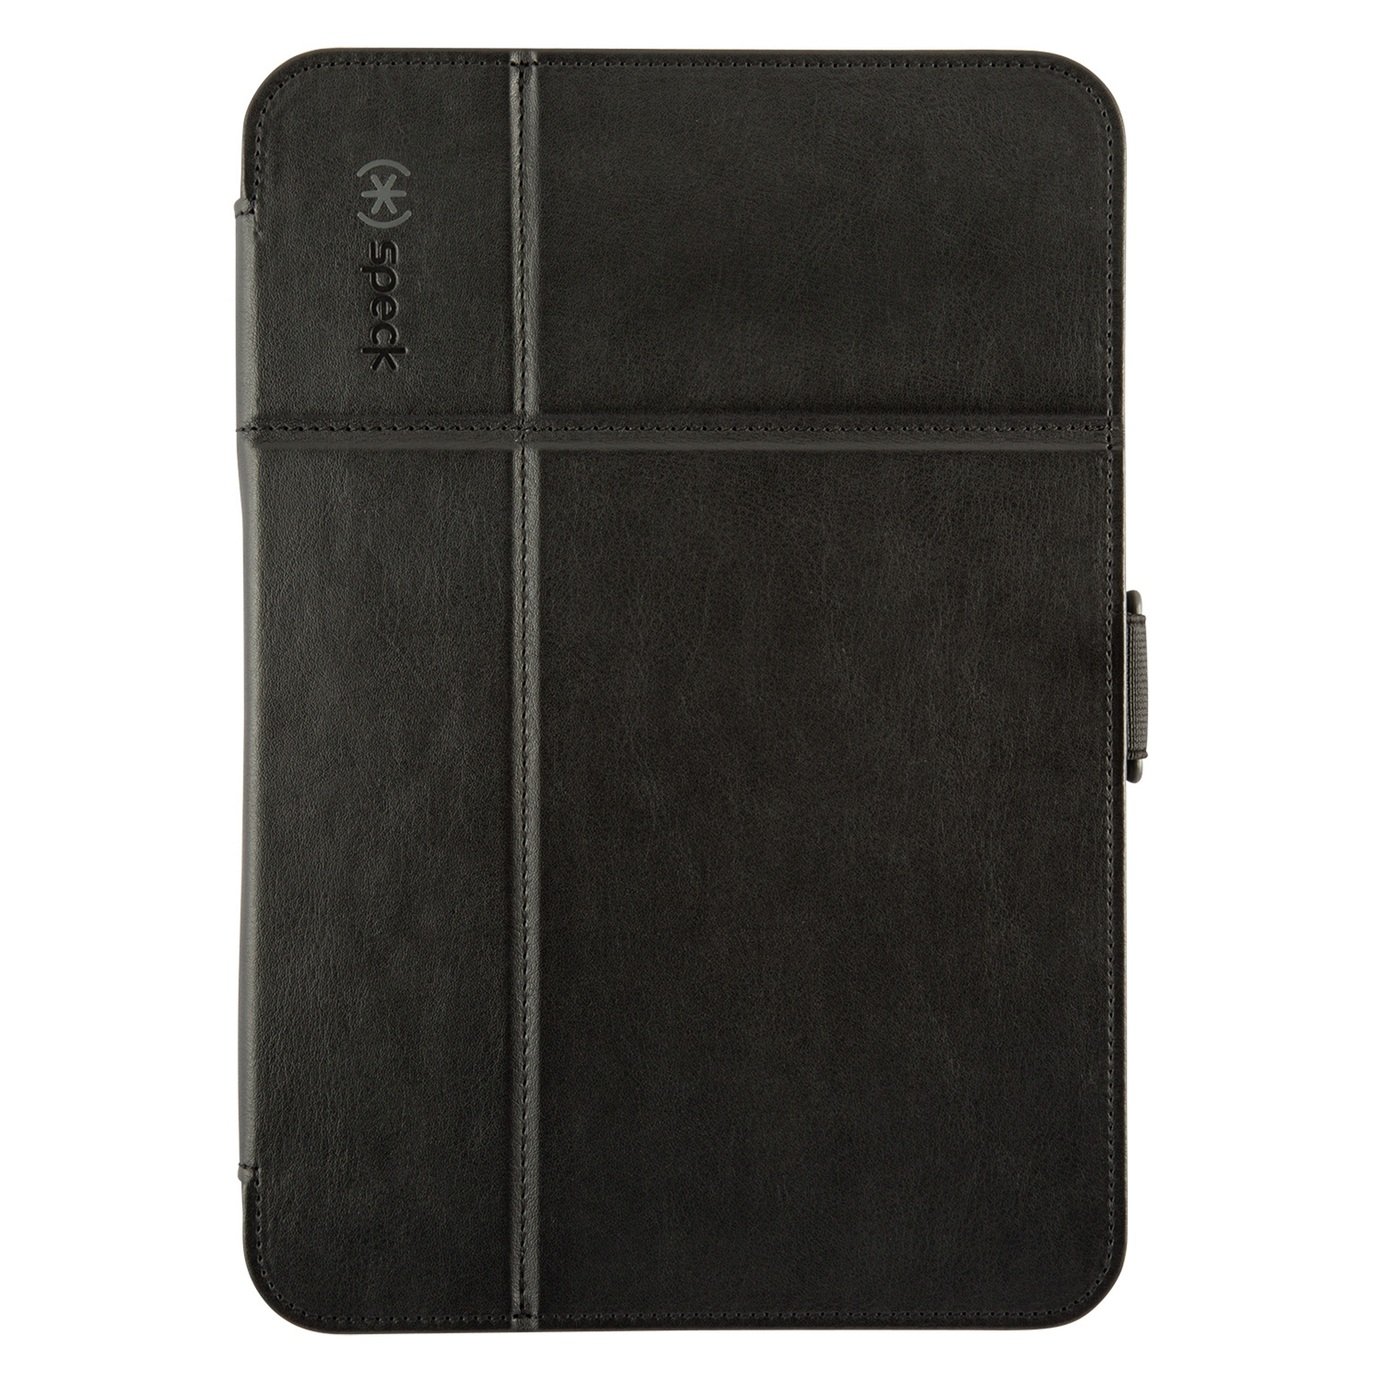 Speck Stylefolio 7-8.5 Inch Universal Tablet Case - Black